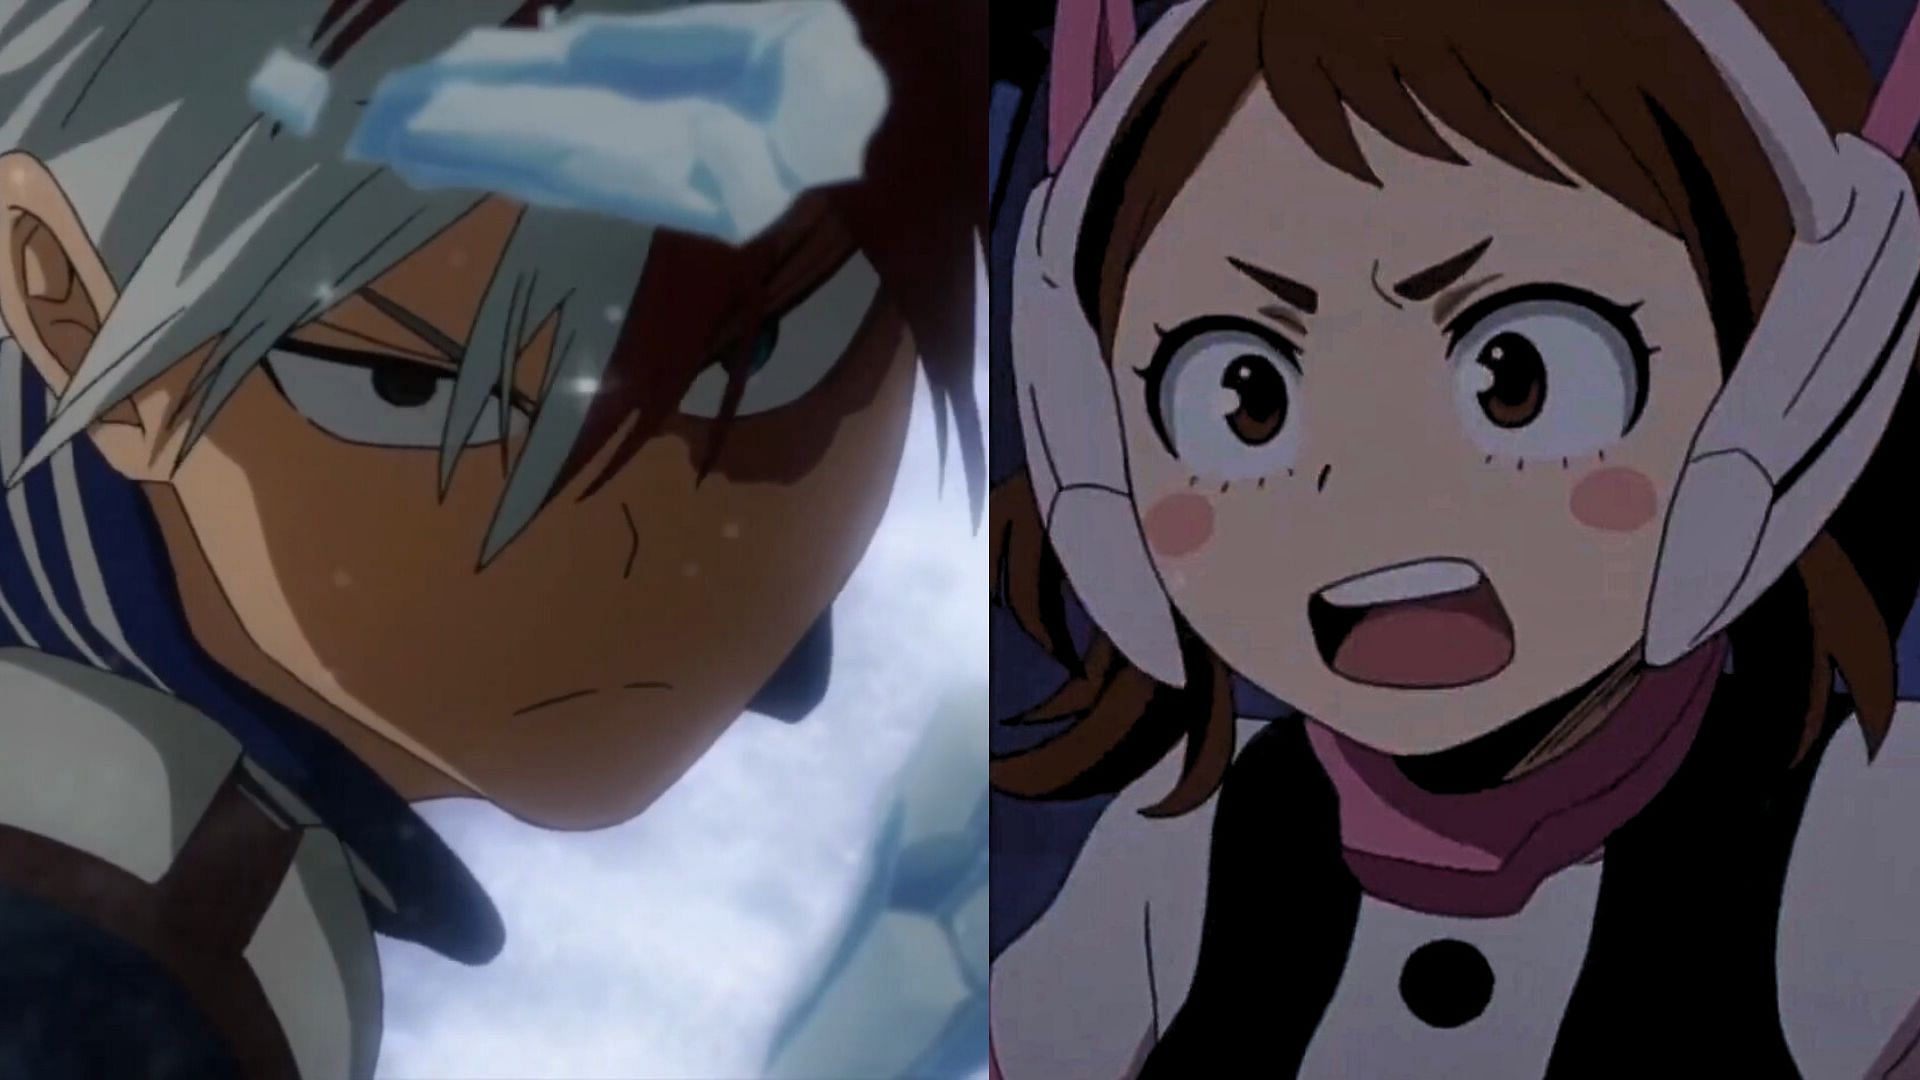 Shoto and Ochaco as seen in the My Hero Academia anime (Images via Bones)